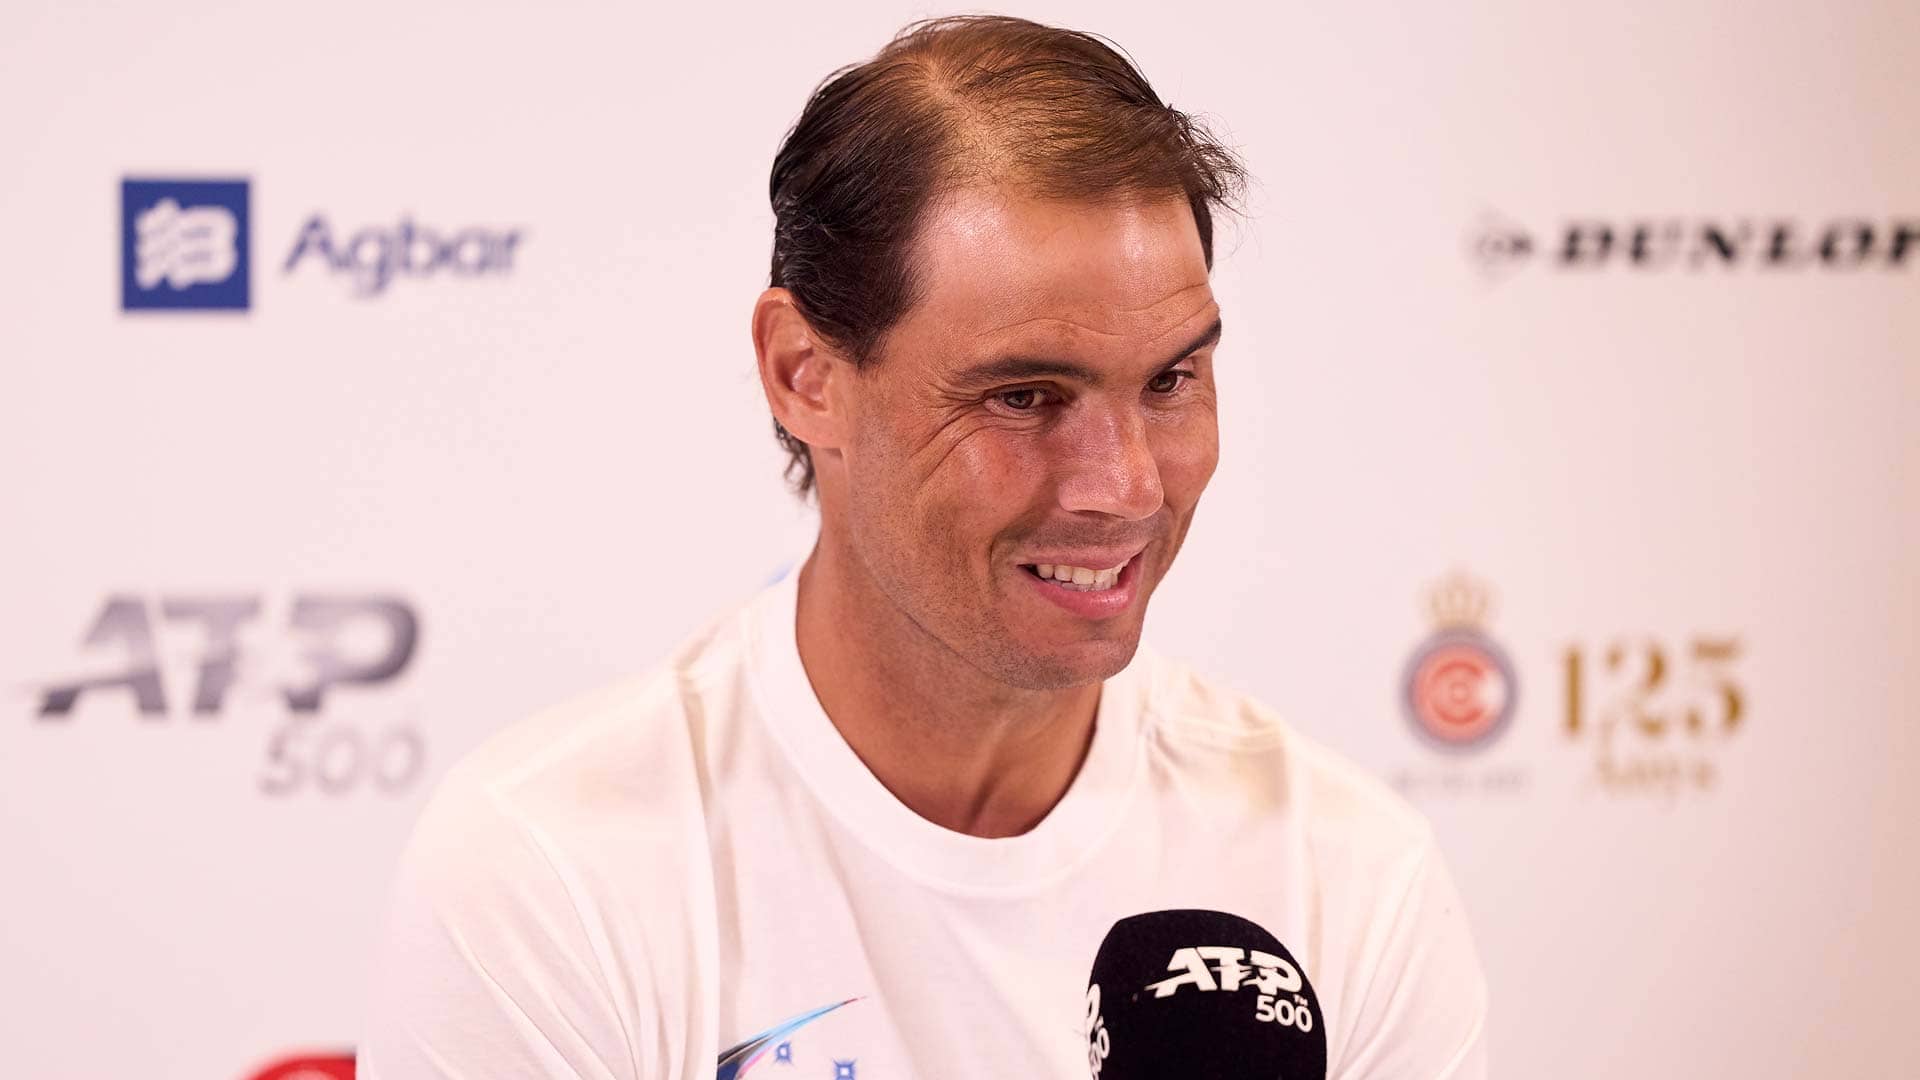 Rafael Nadal talks to media on Monday at the Barcelona Open Banc Sabadell.